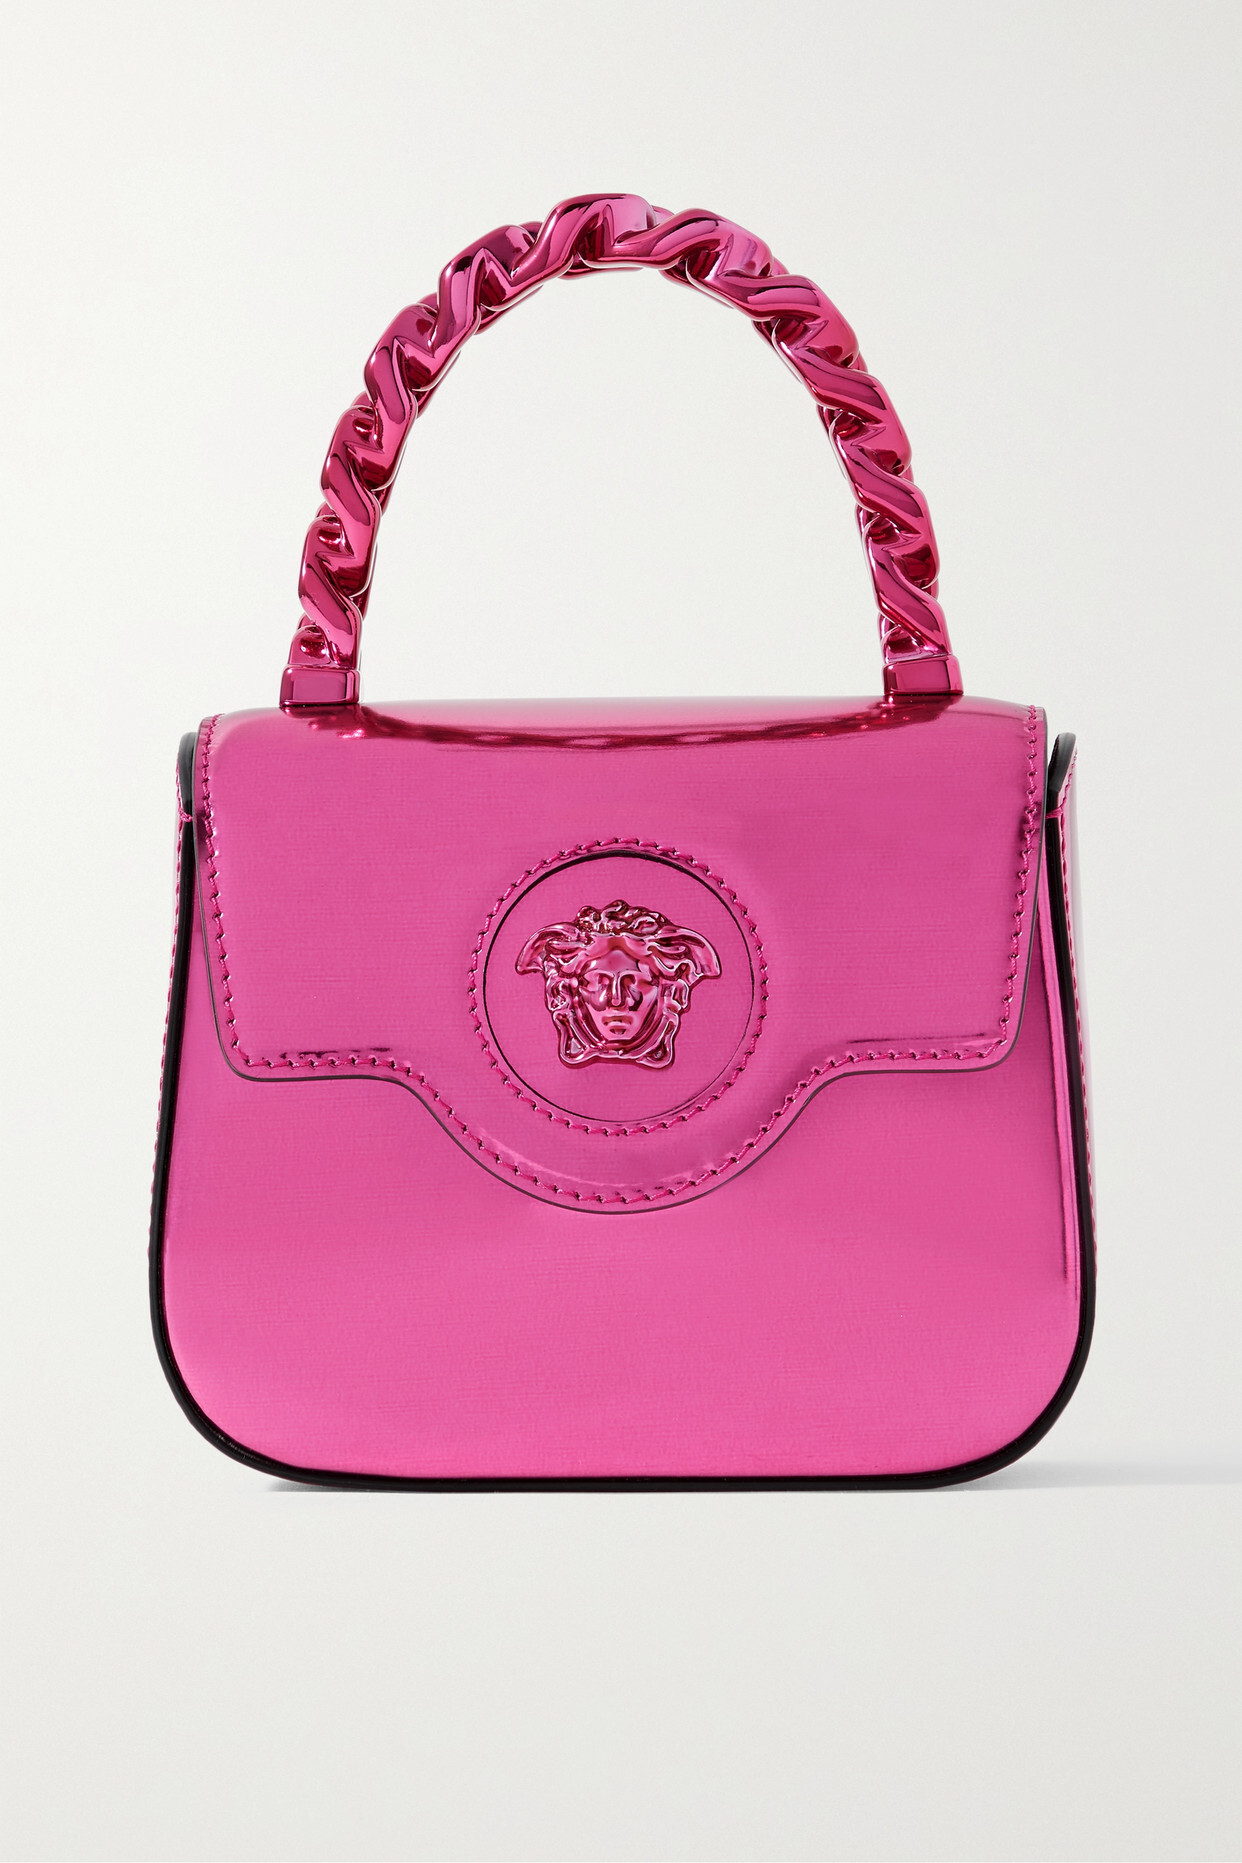 Versace - La Medusa Mini Metallic Patent-leather Tote - Pink